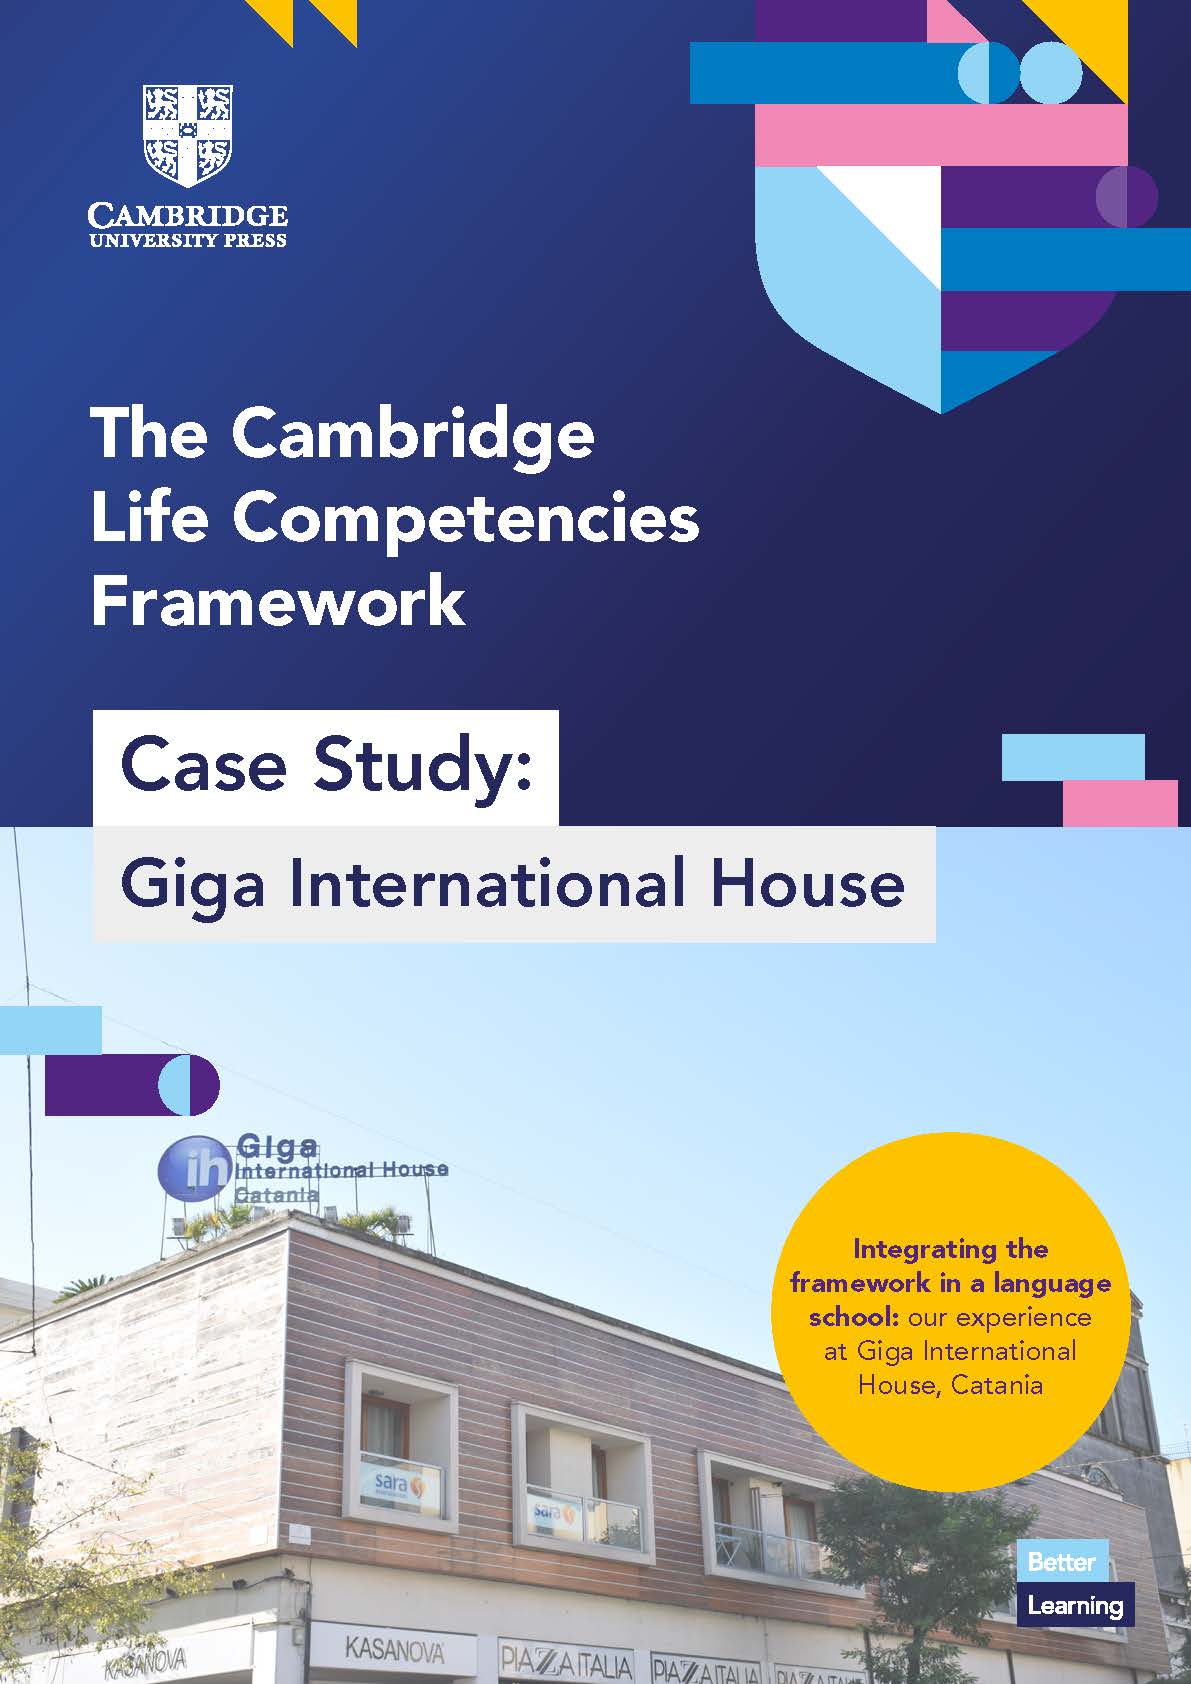 Giga International House